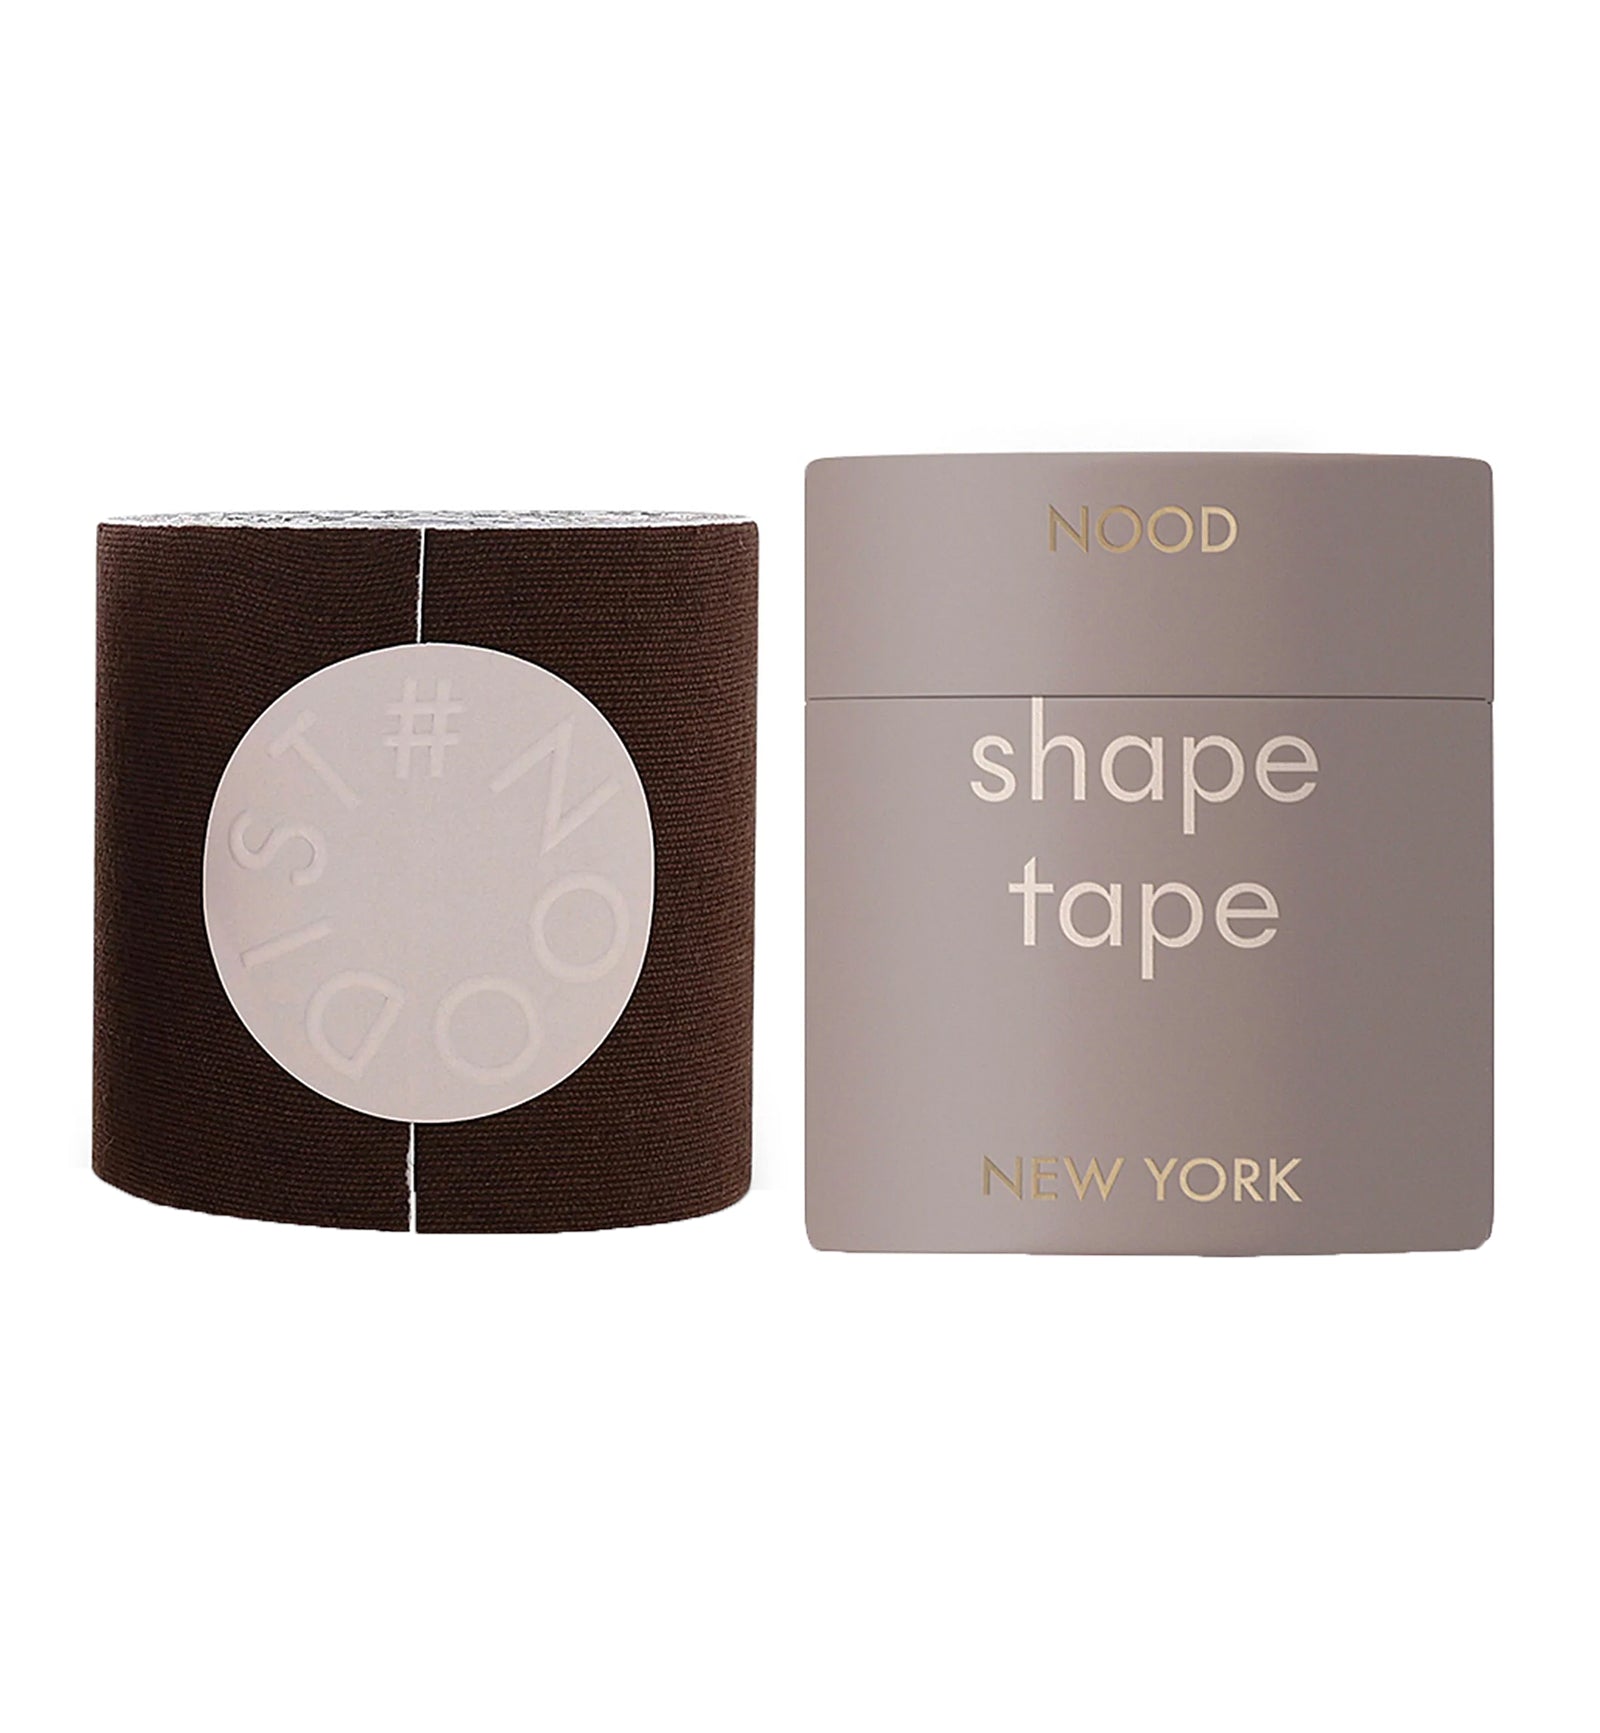 NOOD Shape Tape Breast Tape (16 ft Roll), Nood 9 - Nood 9,1 Roll